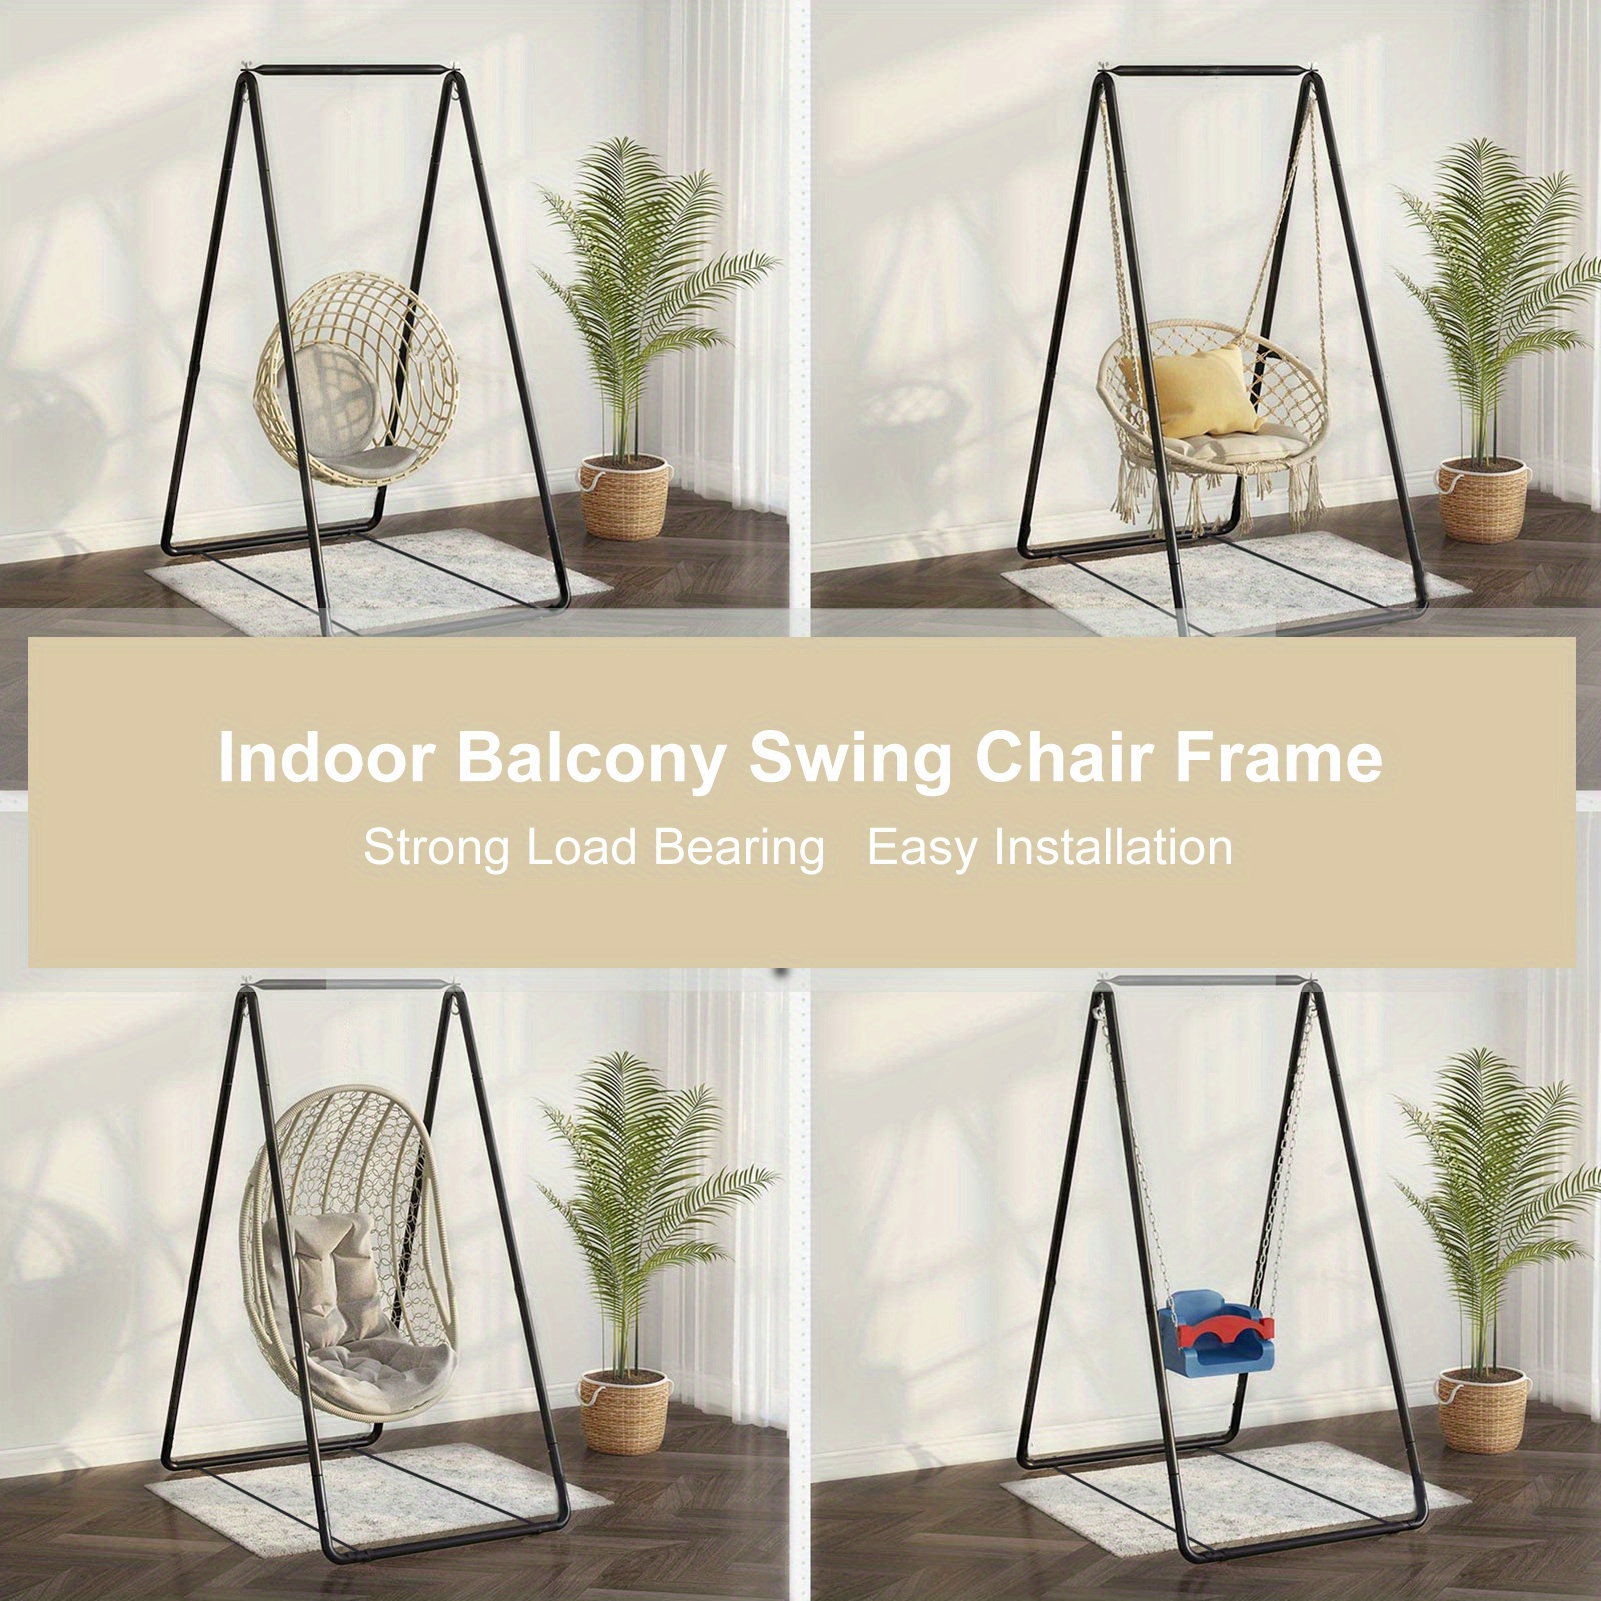 

1 35.46x33.49x57.13 Inch Outdoor Hammock Swing Rocking Chair Cradle Rack Indoor Balcony Gift Swing Chair Hanger (hammock Chair Not Included)